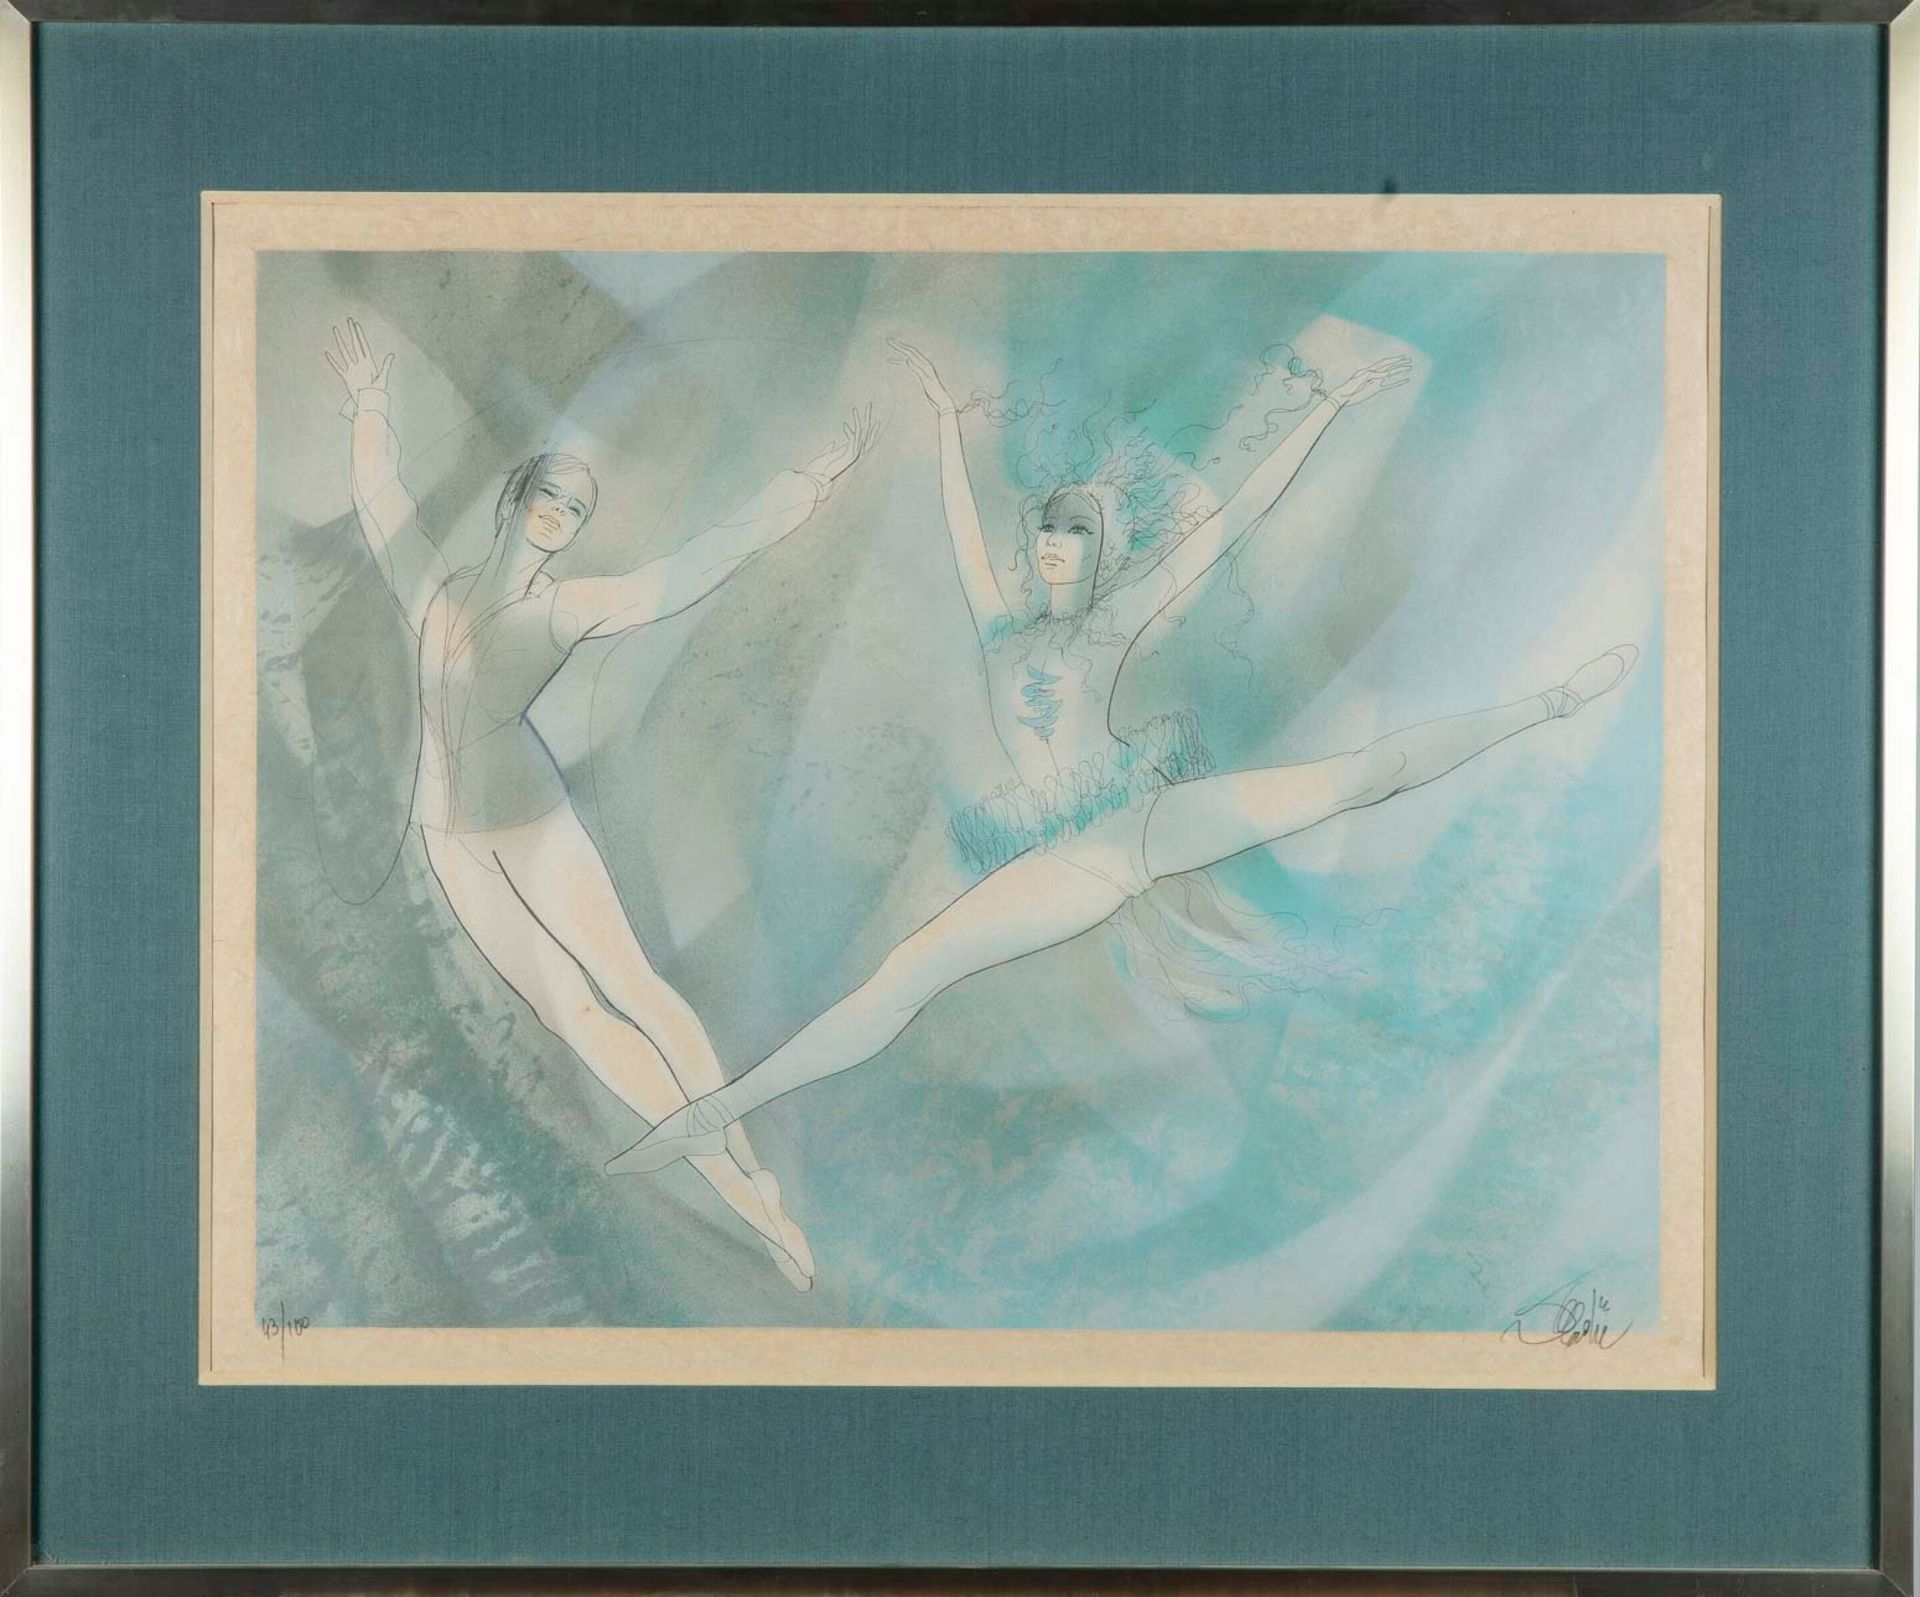 Null 让-巴蒂斯特-瓦拉迪 (1933年)

舞蹈家们

日本纸上的石版画

右下方有签名，编号为43/100

54 x 68 厘米